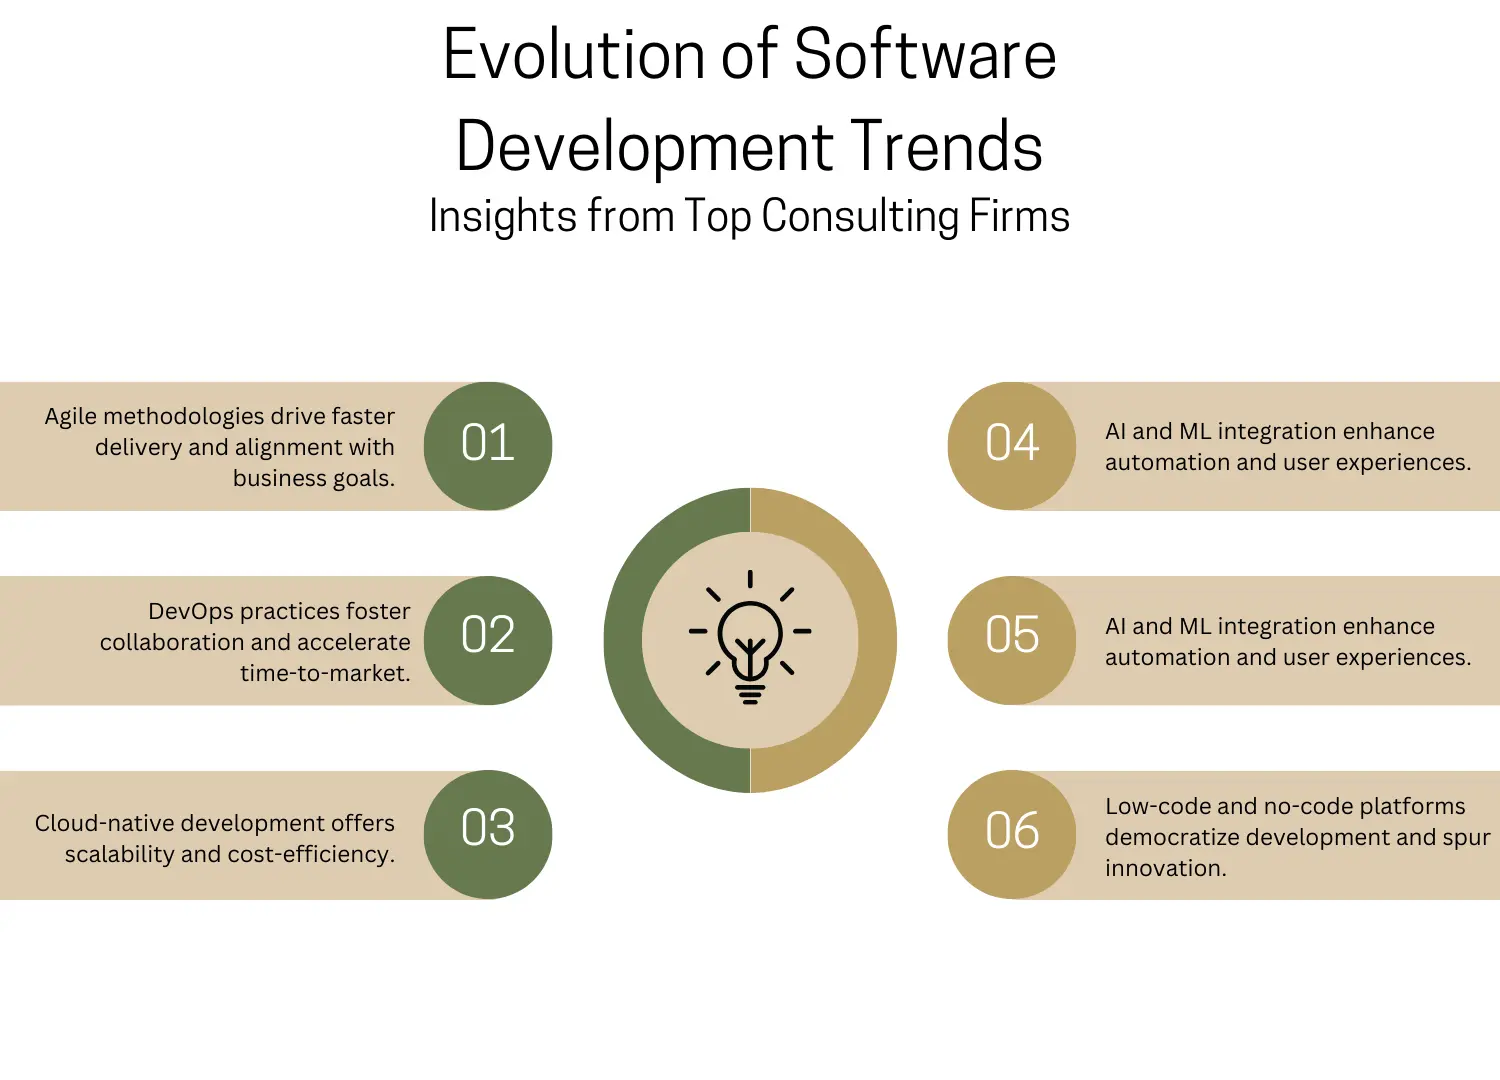 Evolution of software development trends